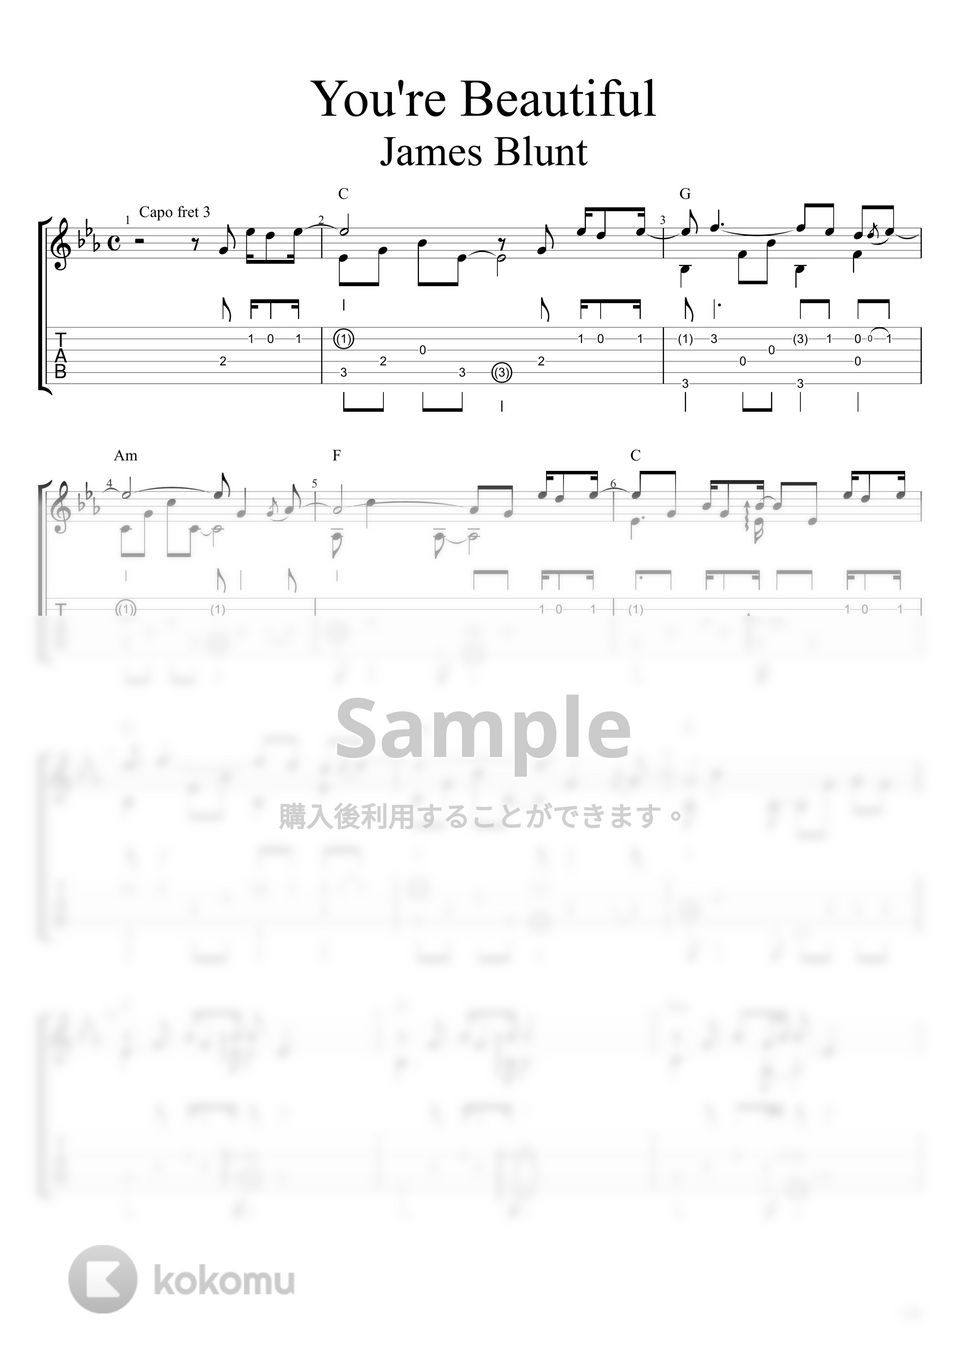 James Blunt - You're Beautiful / ユーアー ビューティフル (Fingerstyle Guitar) by Strings Guitar School